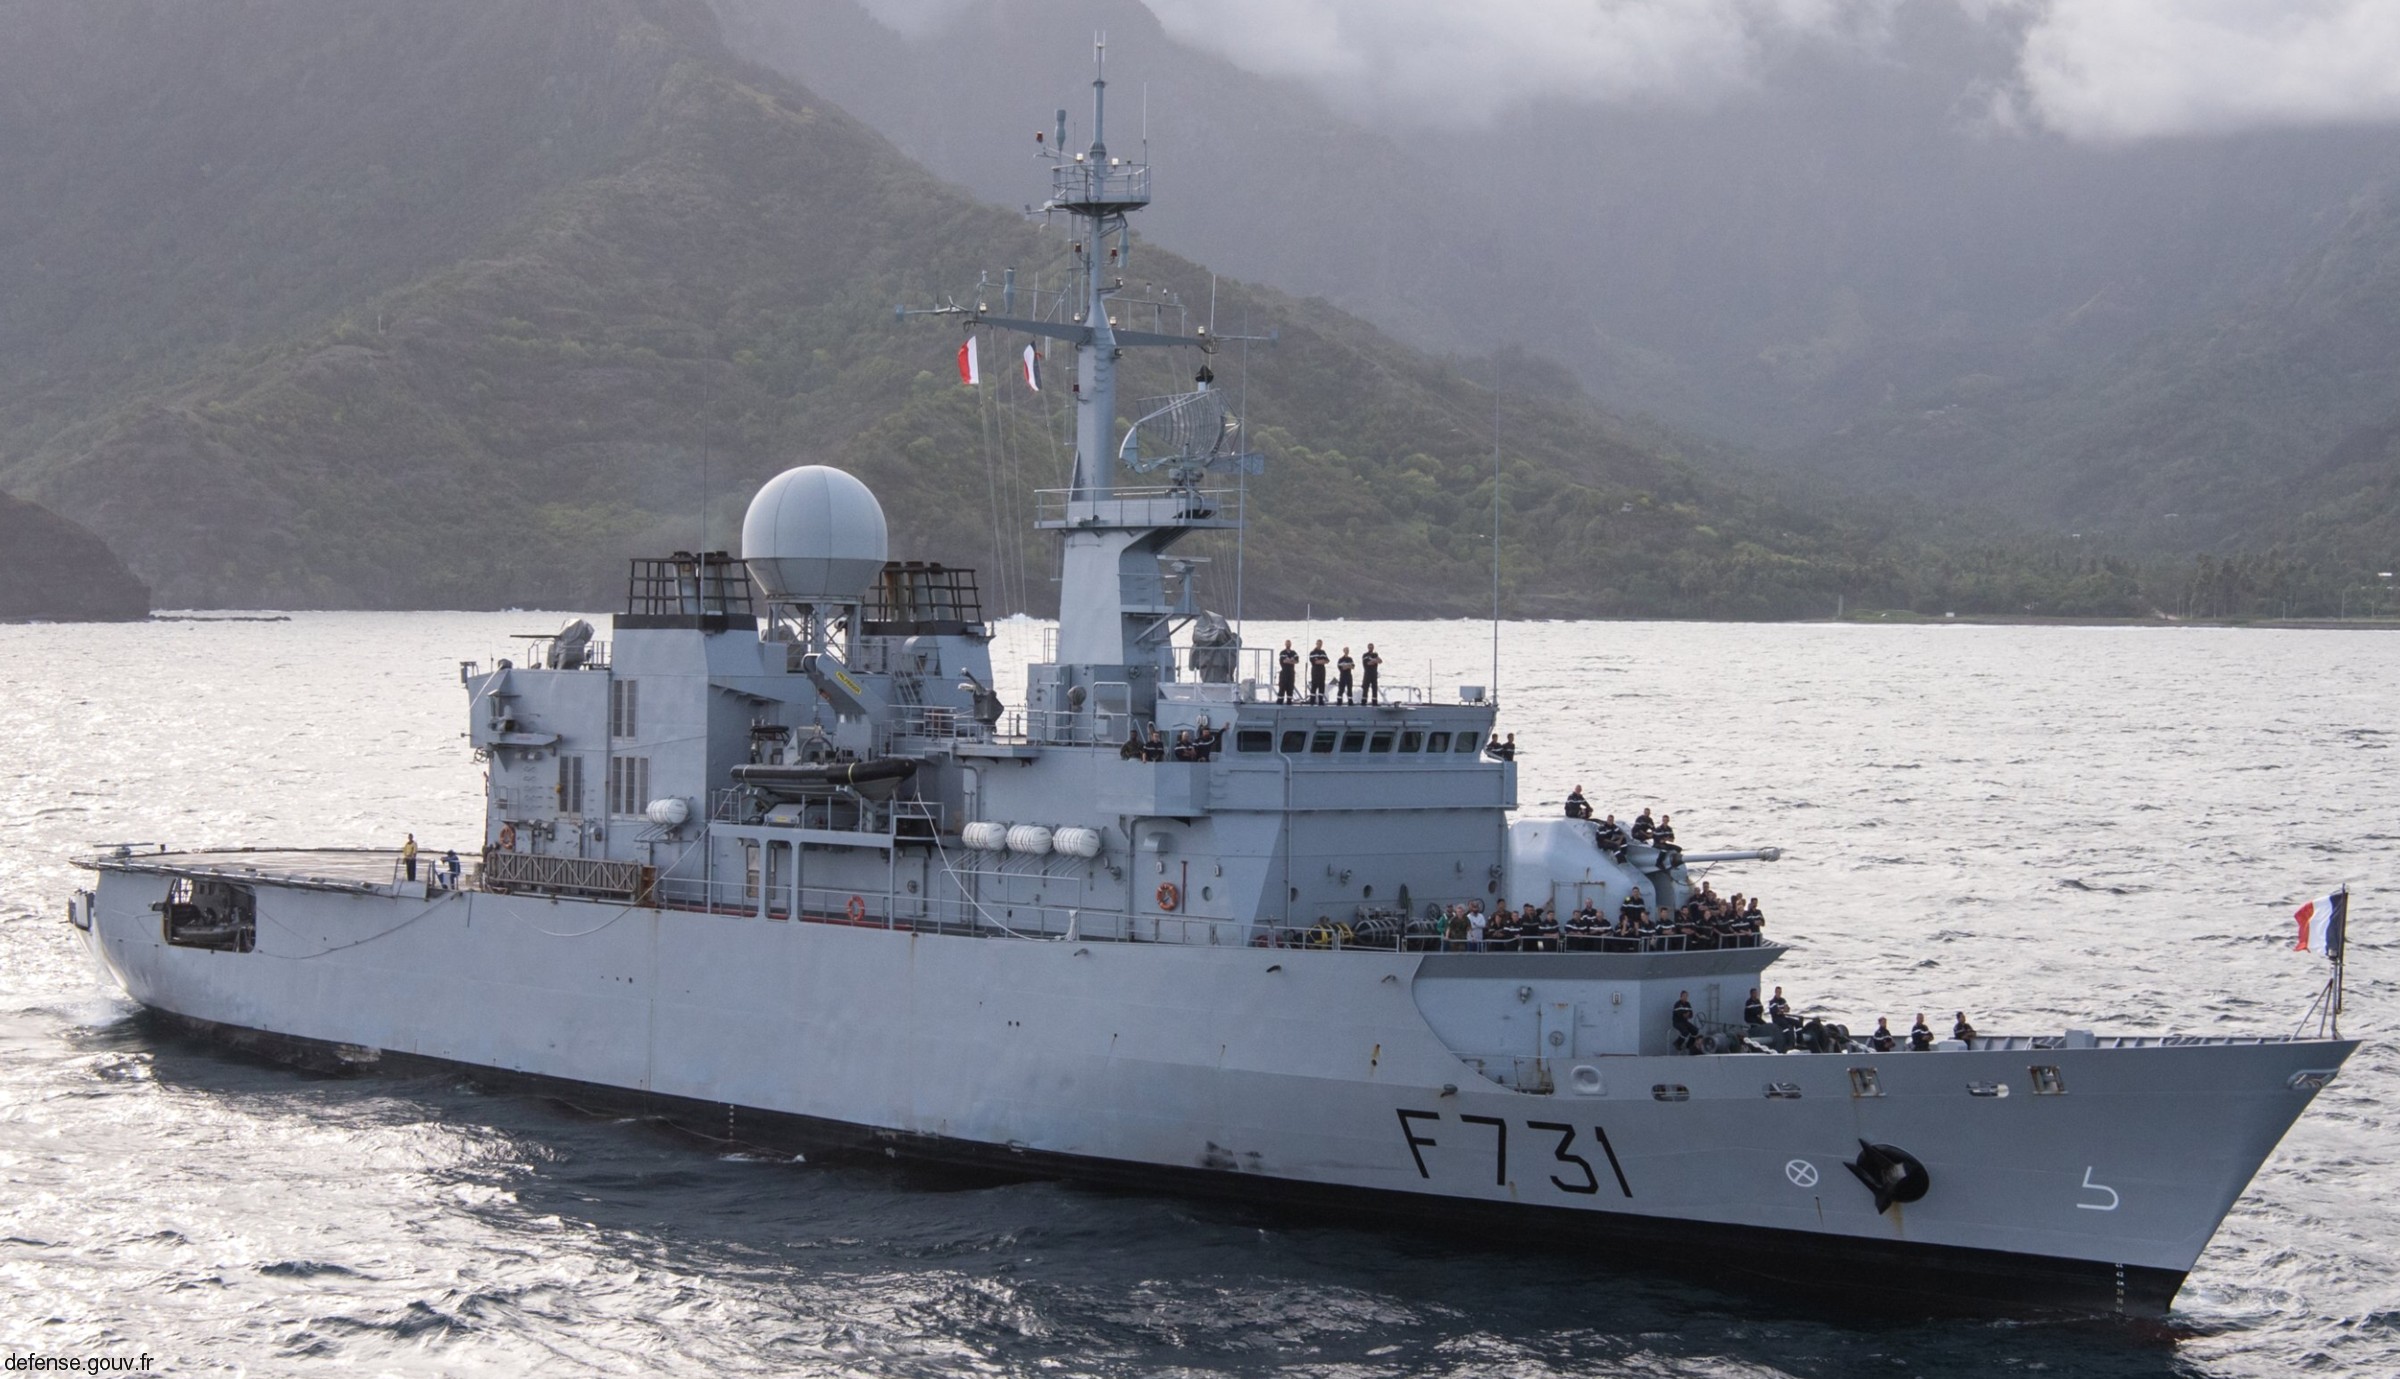 f-731 fs prairial floreal class frigate french navy marine nationale fregate surveillance 53